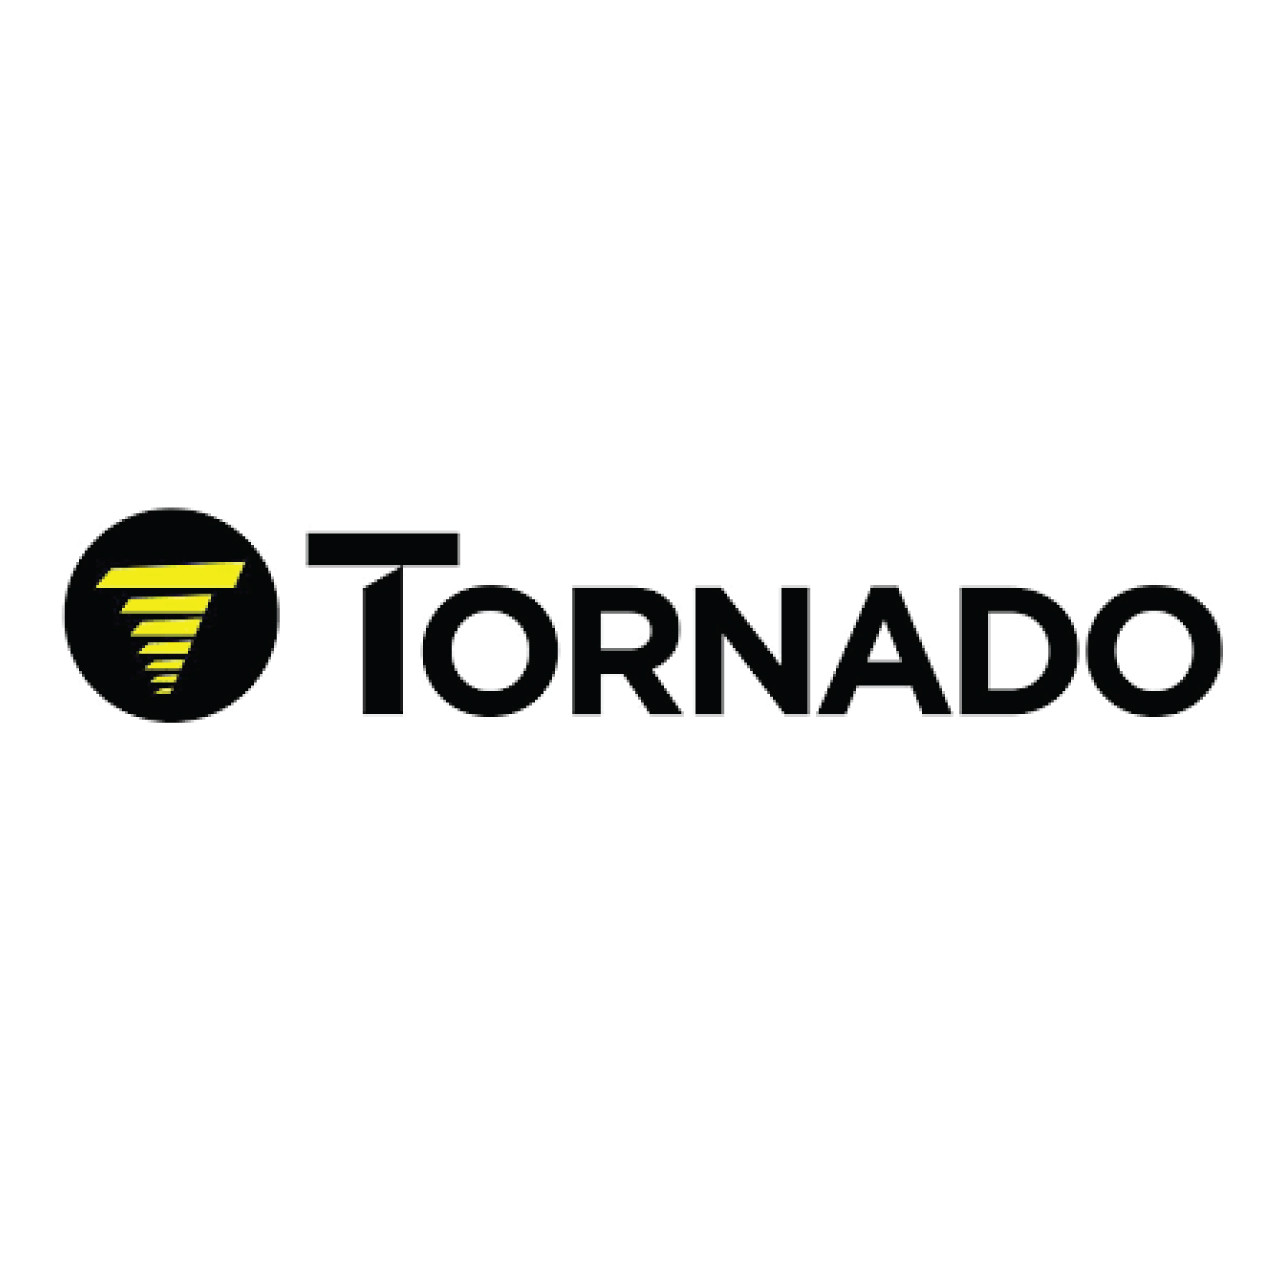 03-6010-0000, Tornado 03-6010-0000, Tornado GASKET BOLT 10MM PAD, Tornado parts